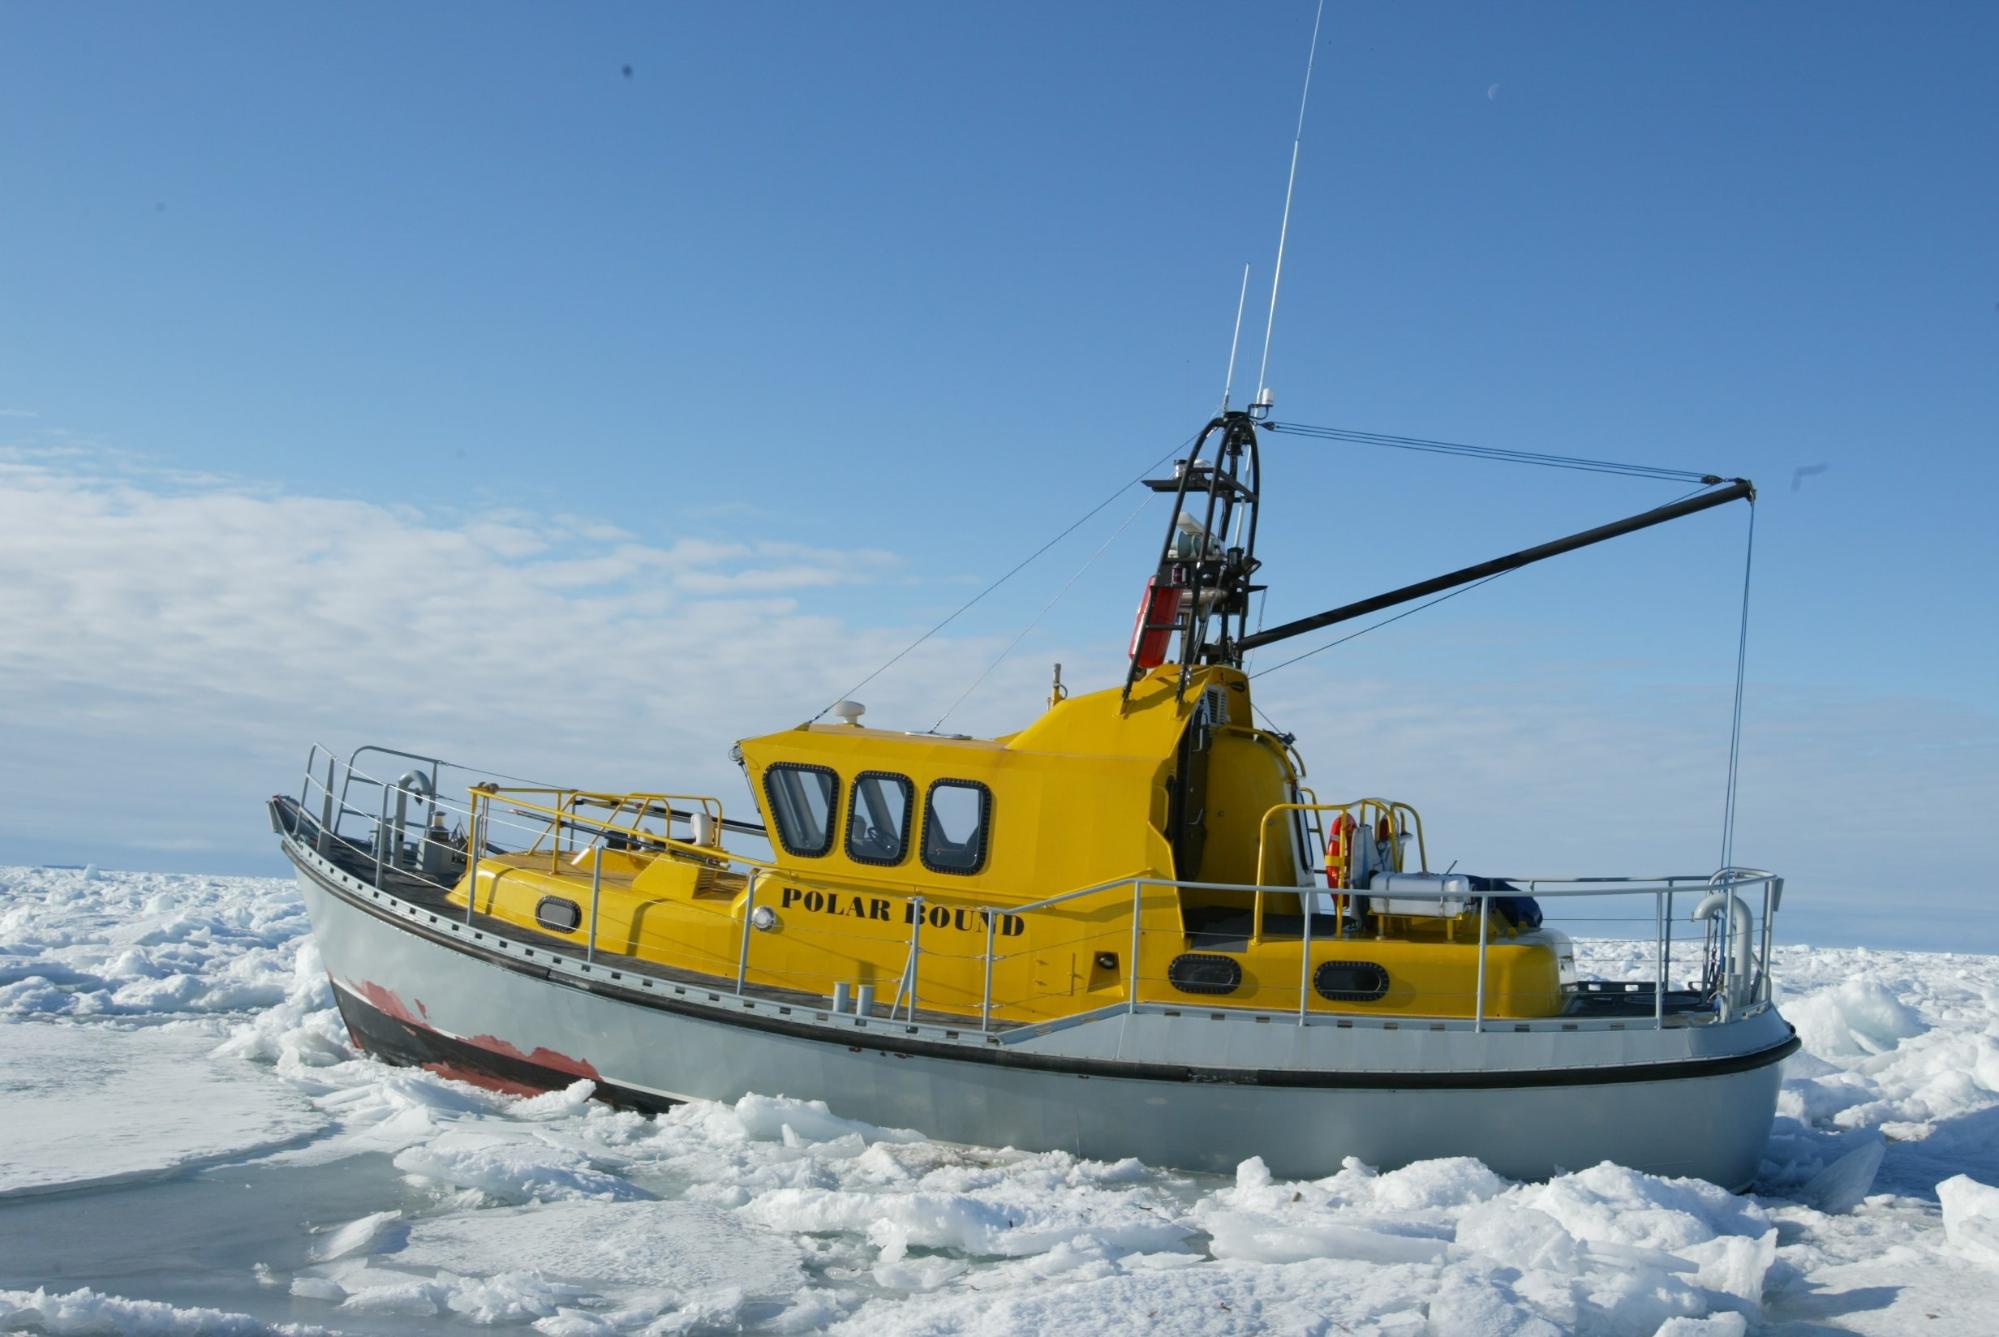 Polar exploration boat